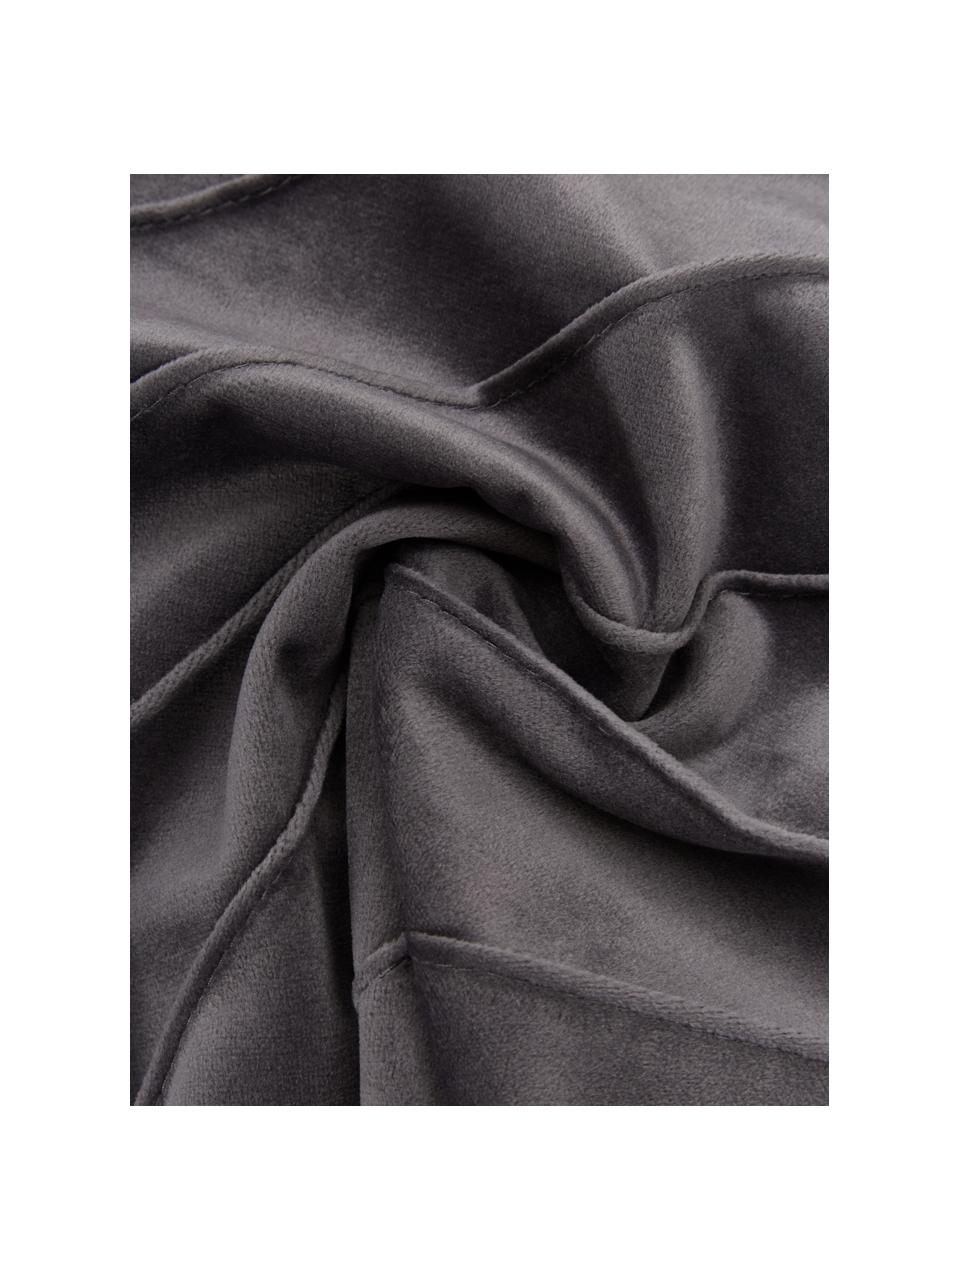 Fluwelen kussenhoes Leyla in donkergrijs met structuurpatroon, Fluweel (100% polyester), Donkergrijs, B 30 x L 50 cm